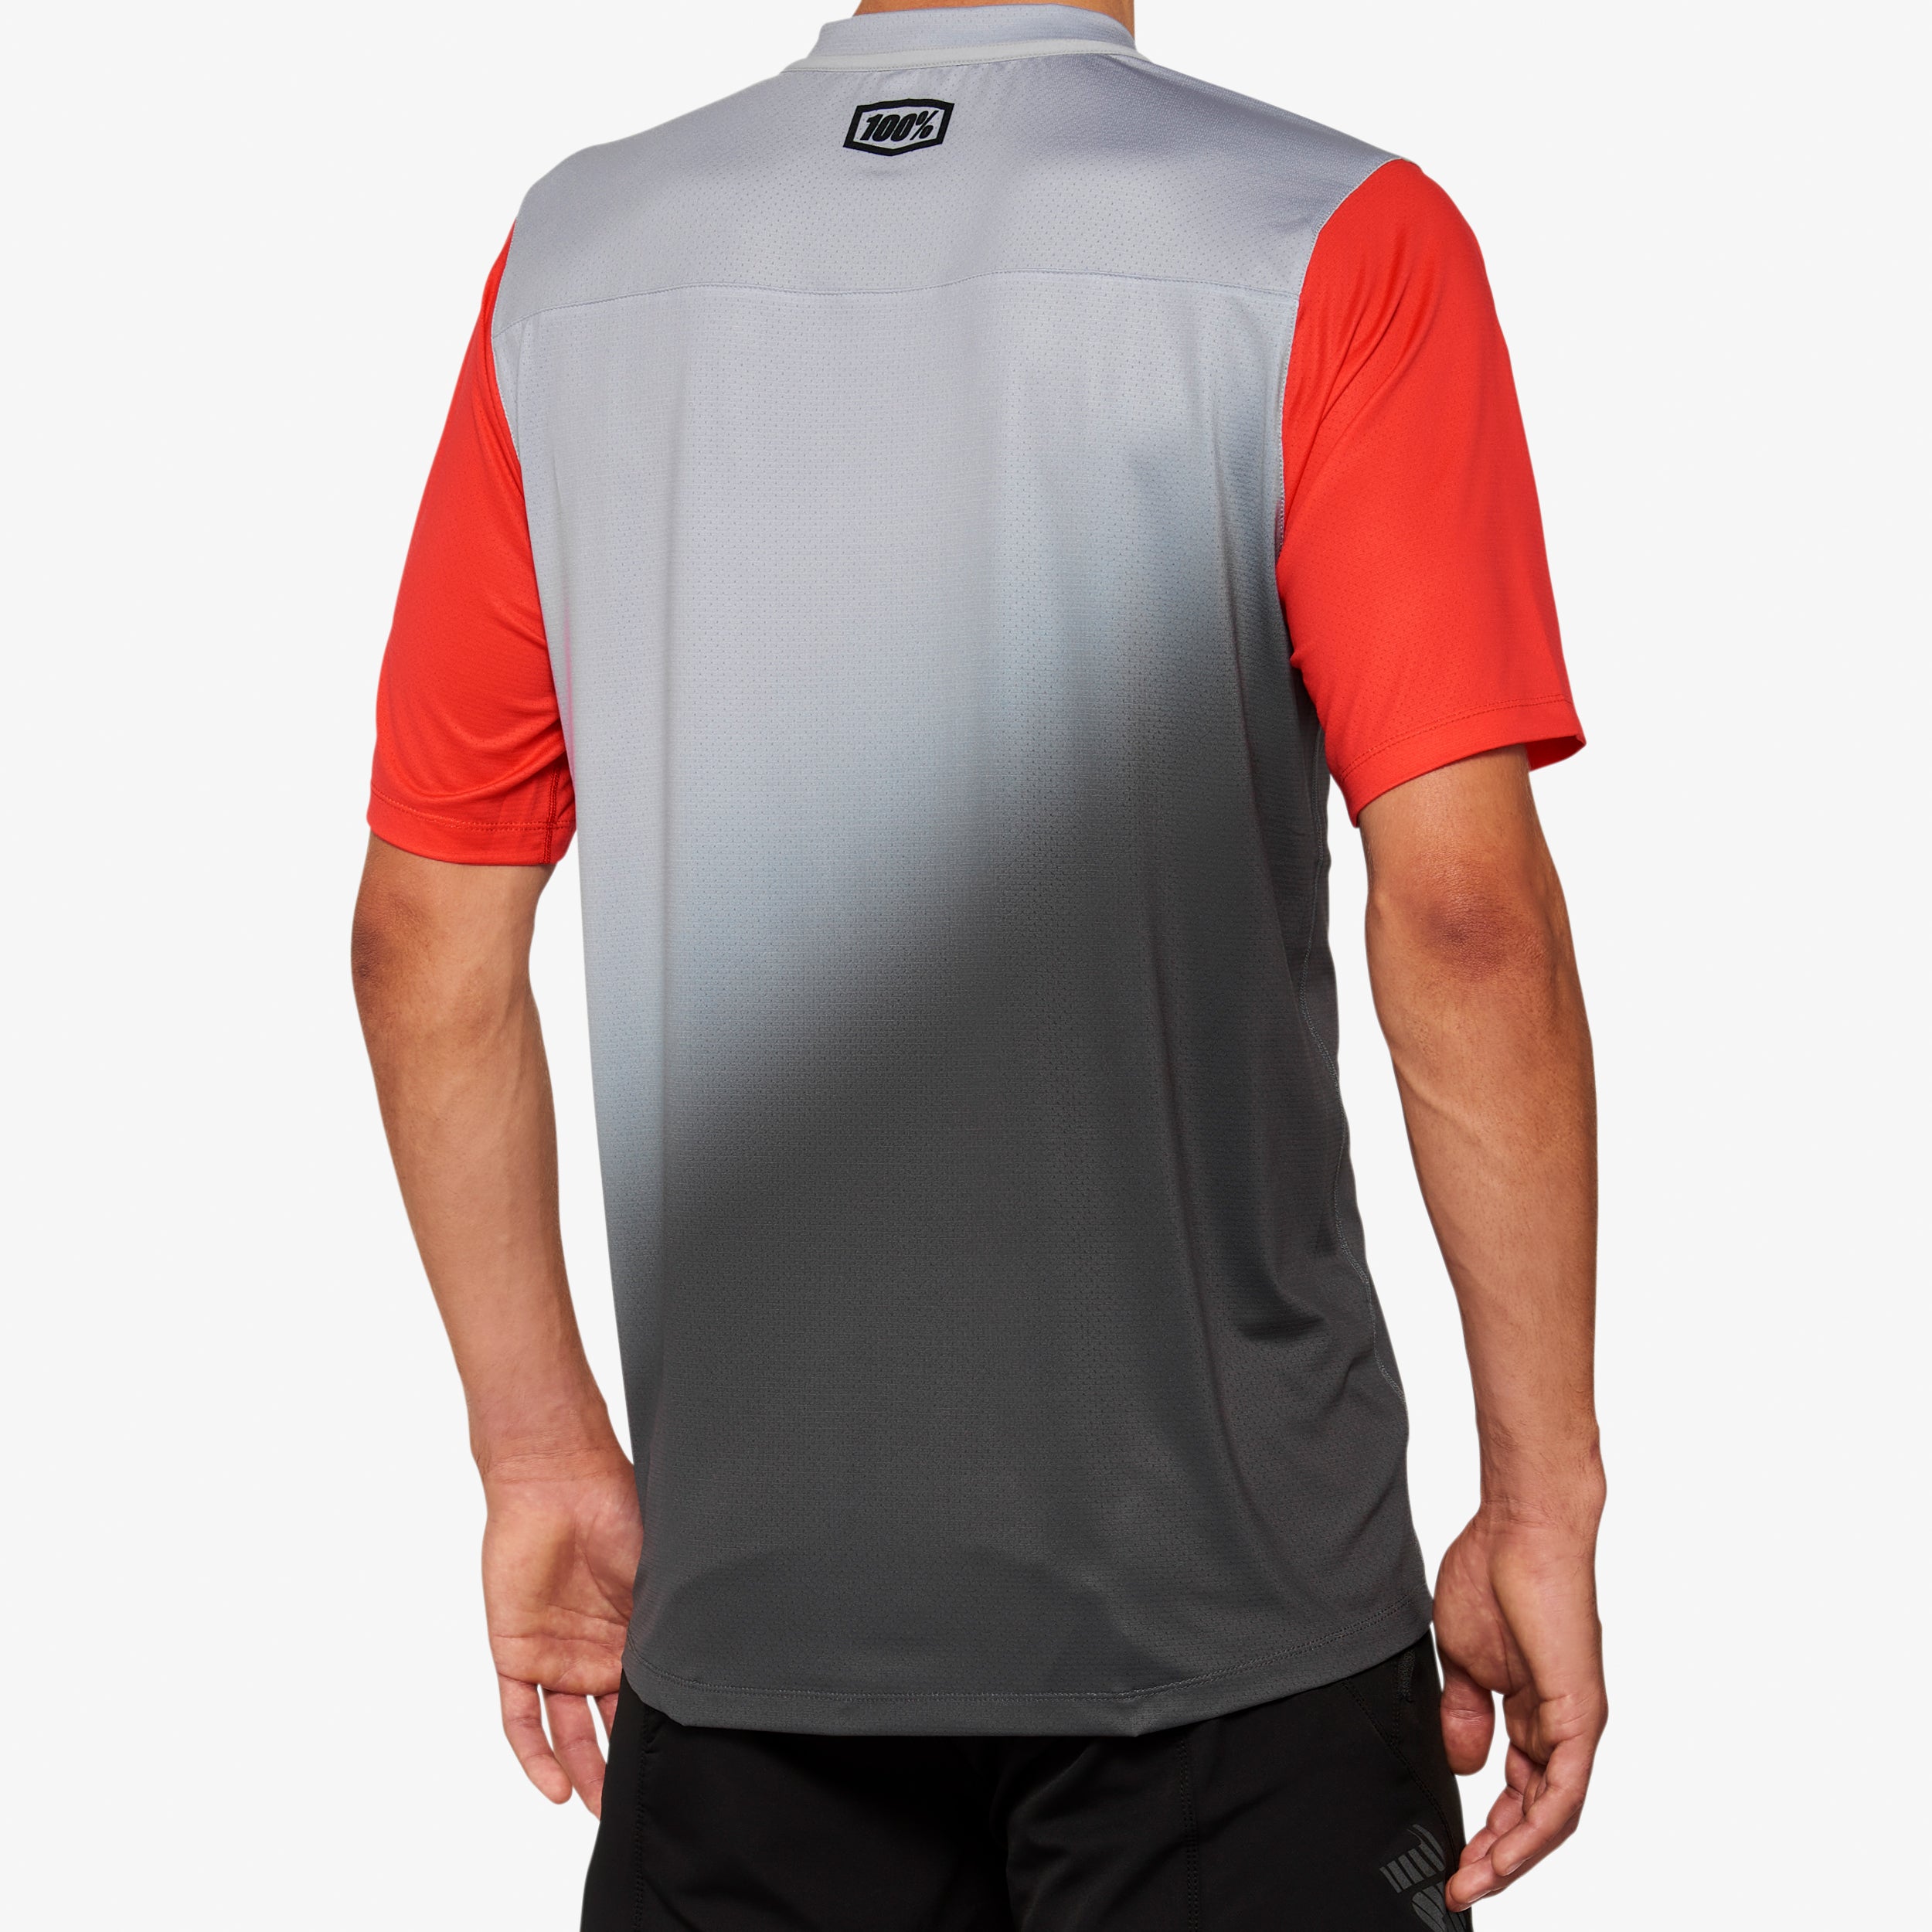 CELIUM Short Sleeve Jersey Grey/Racer Red - Secondary